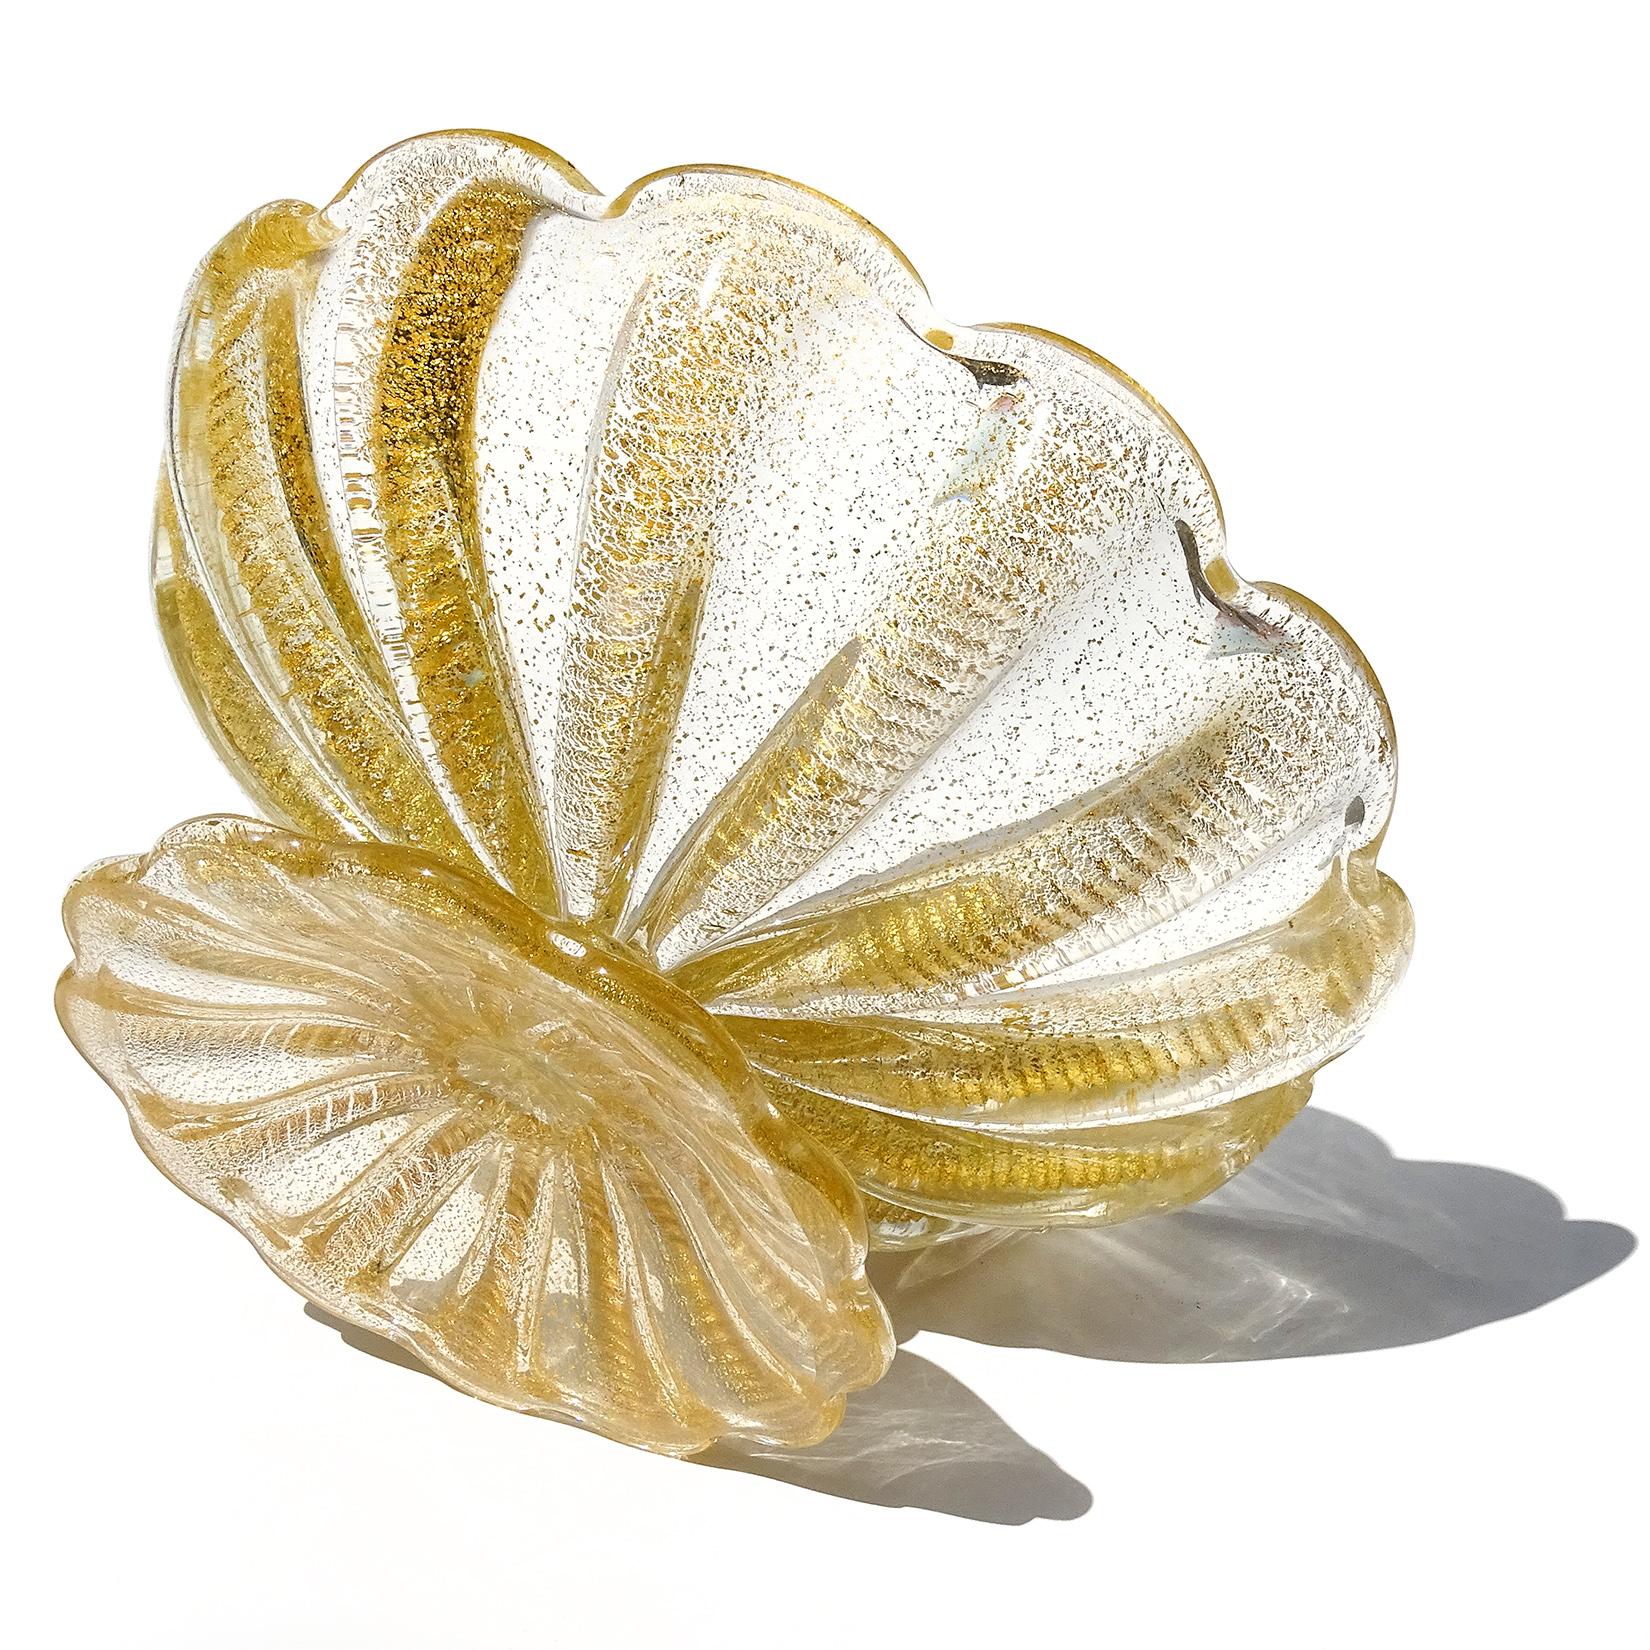 20th Century Ercole Barovier Toso Murano Gold Flecks Italian Art Glass Footed Compote Bowl